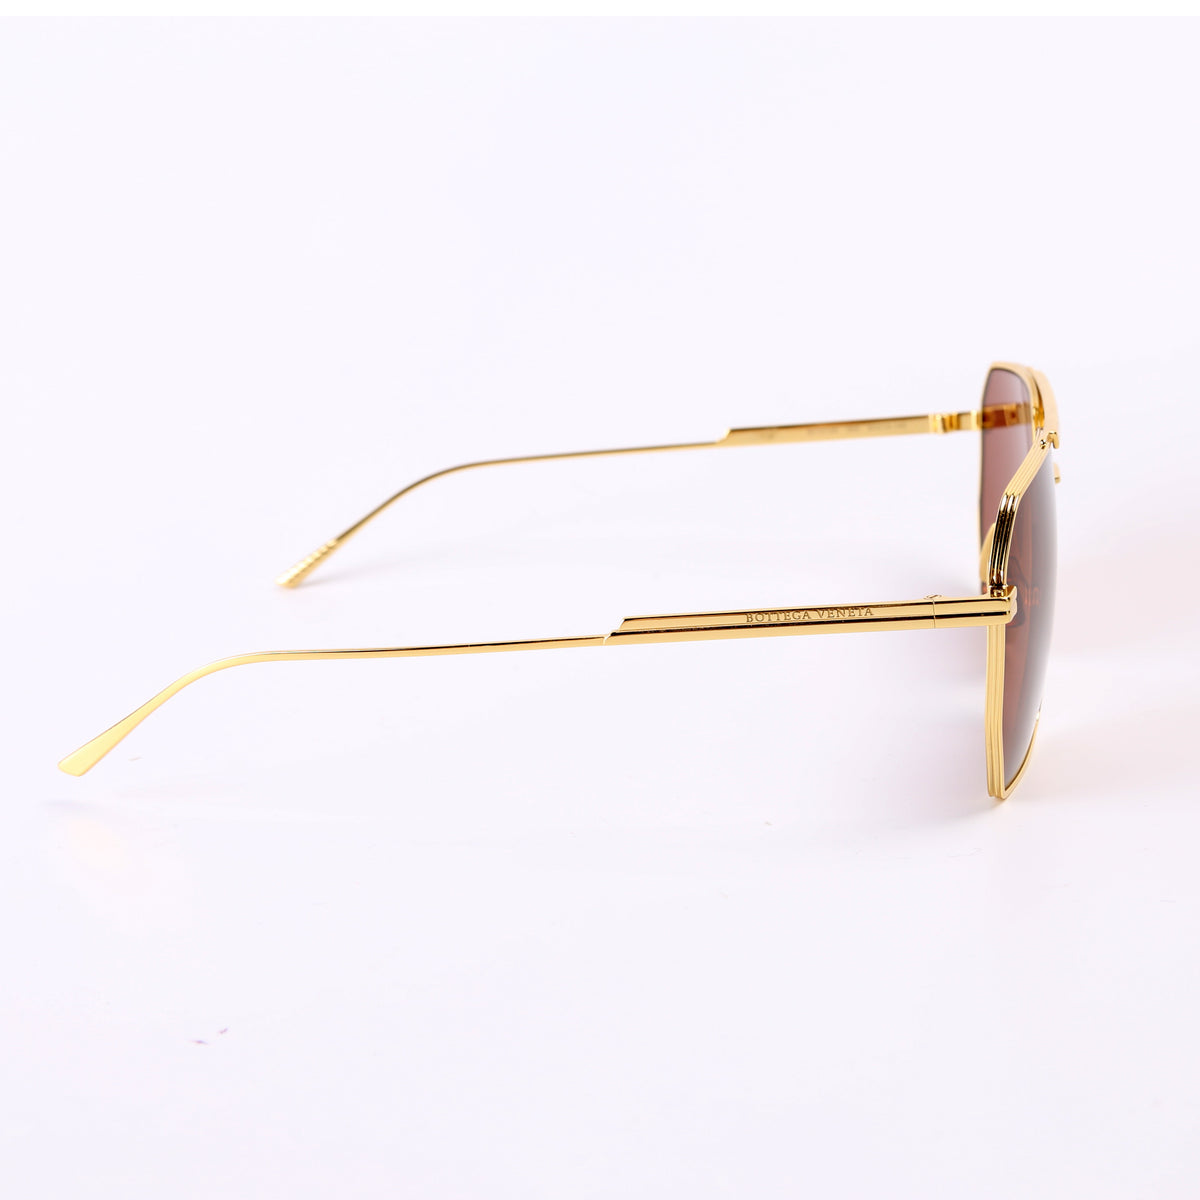 Aviator Sunglasses in Gold - Bottega Veneta